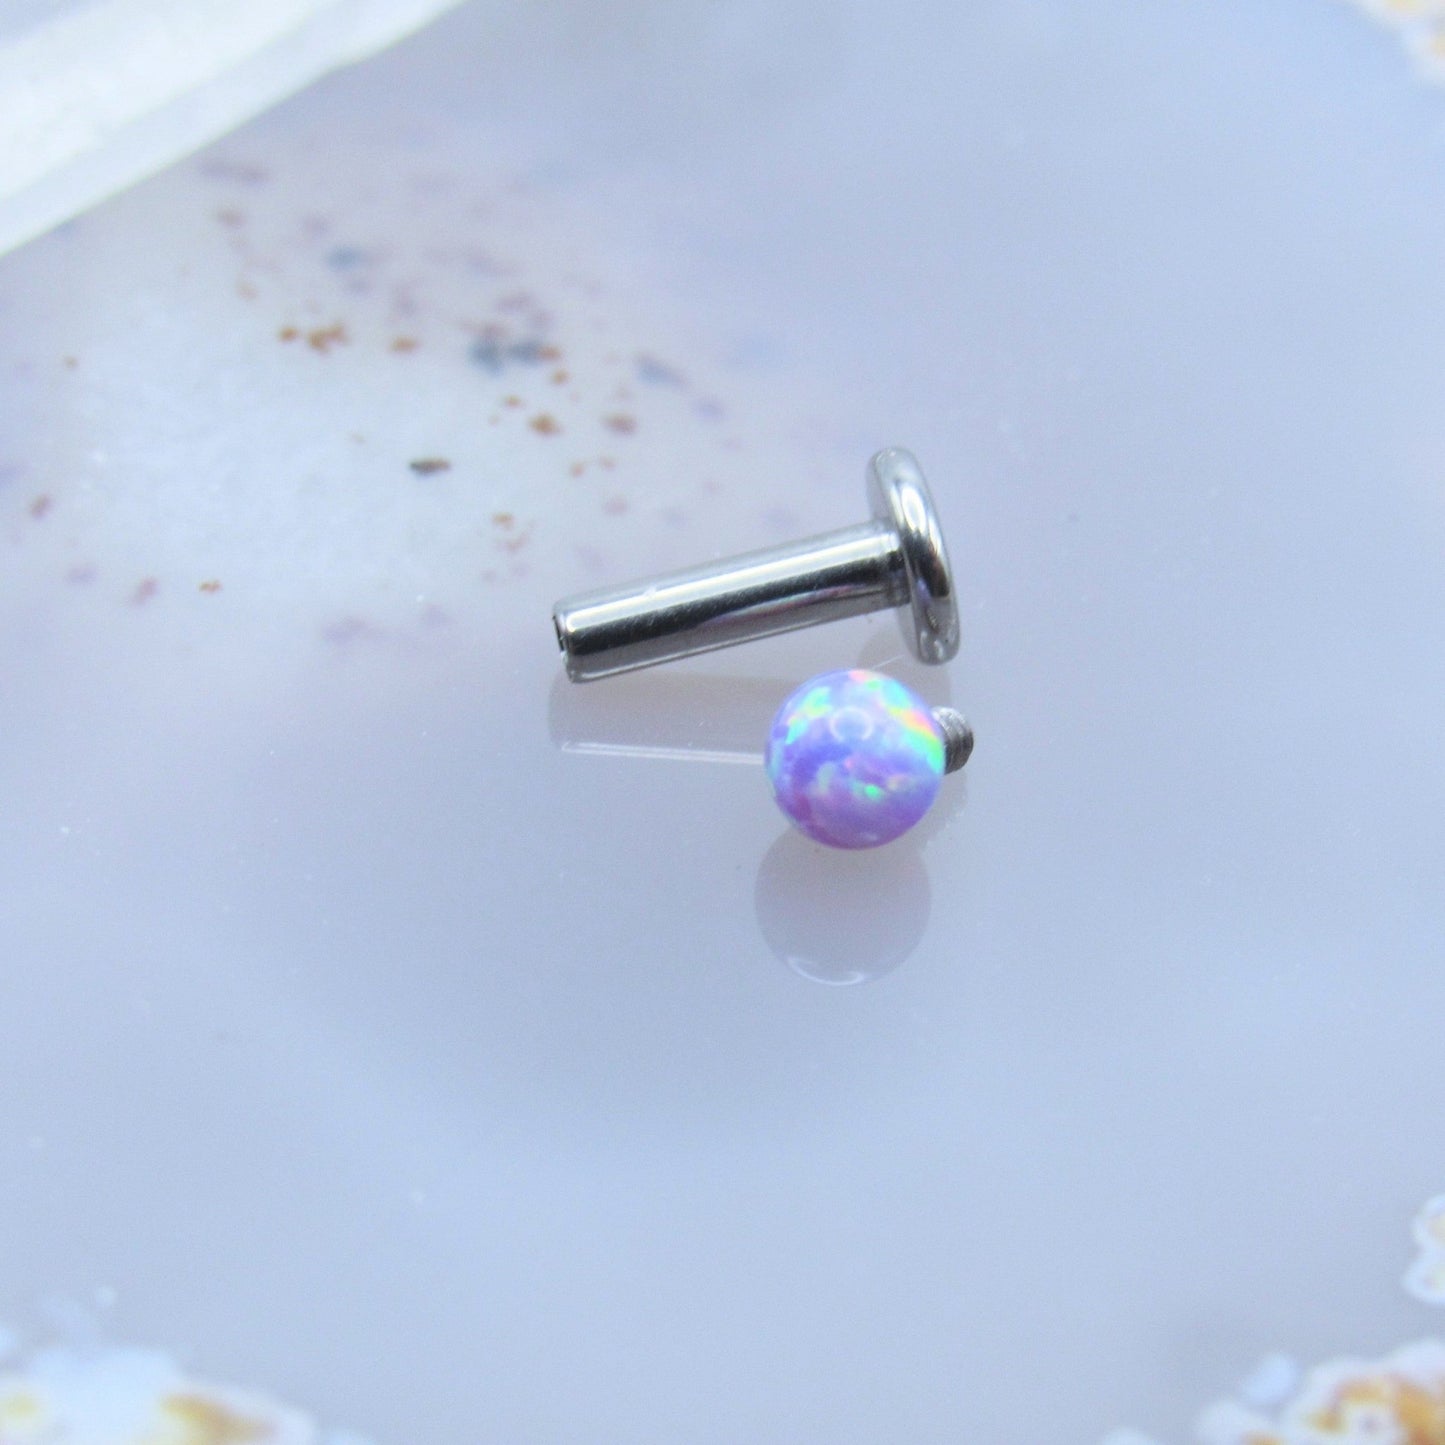 14g Purple opal titanium labret stud earring 1/4"-5/16" length shaft 3mm diameter round ball threaded end body jewelry earring - Siren Body Jewelry